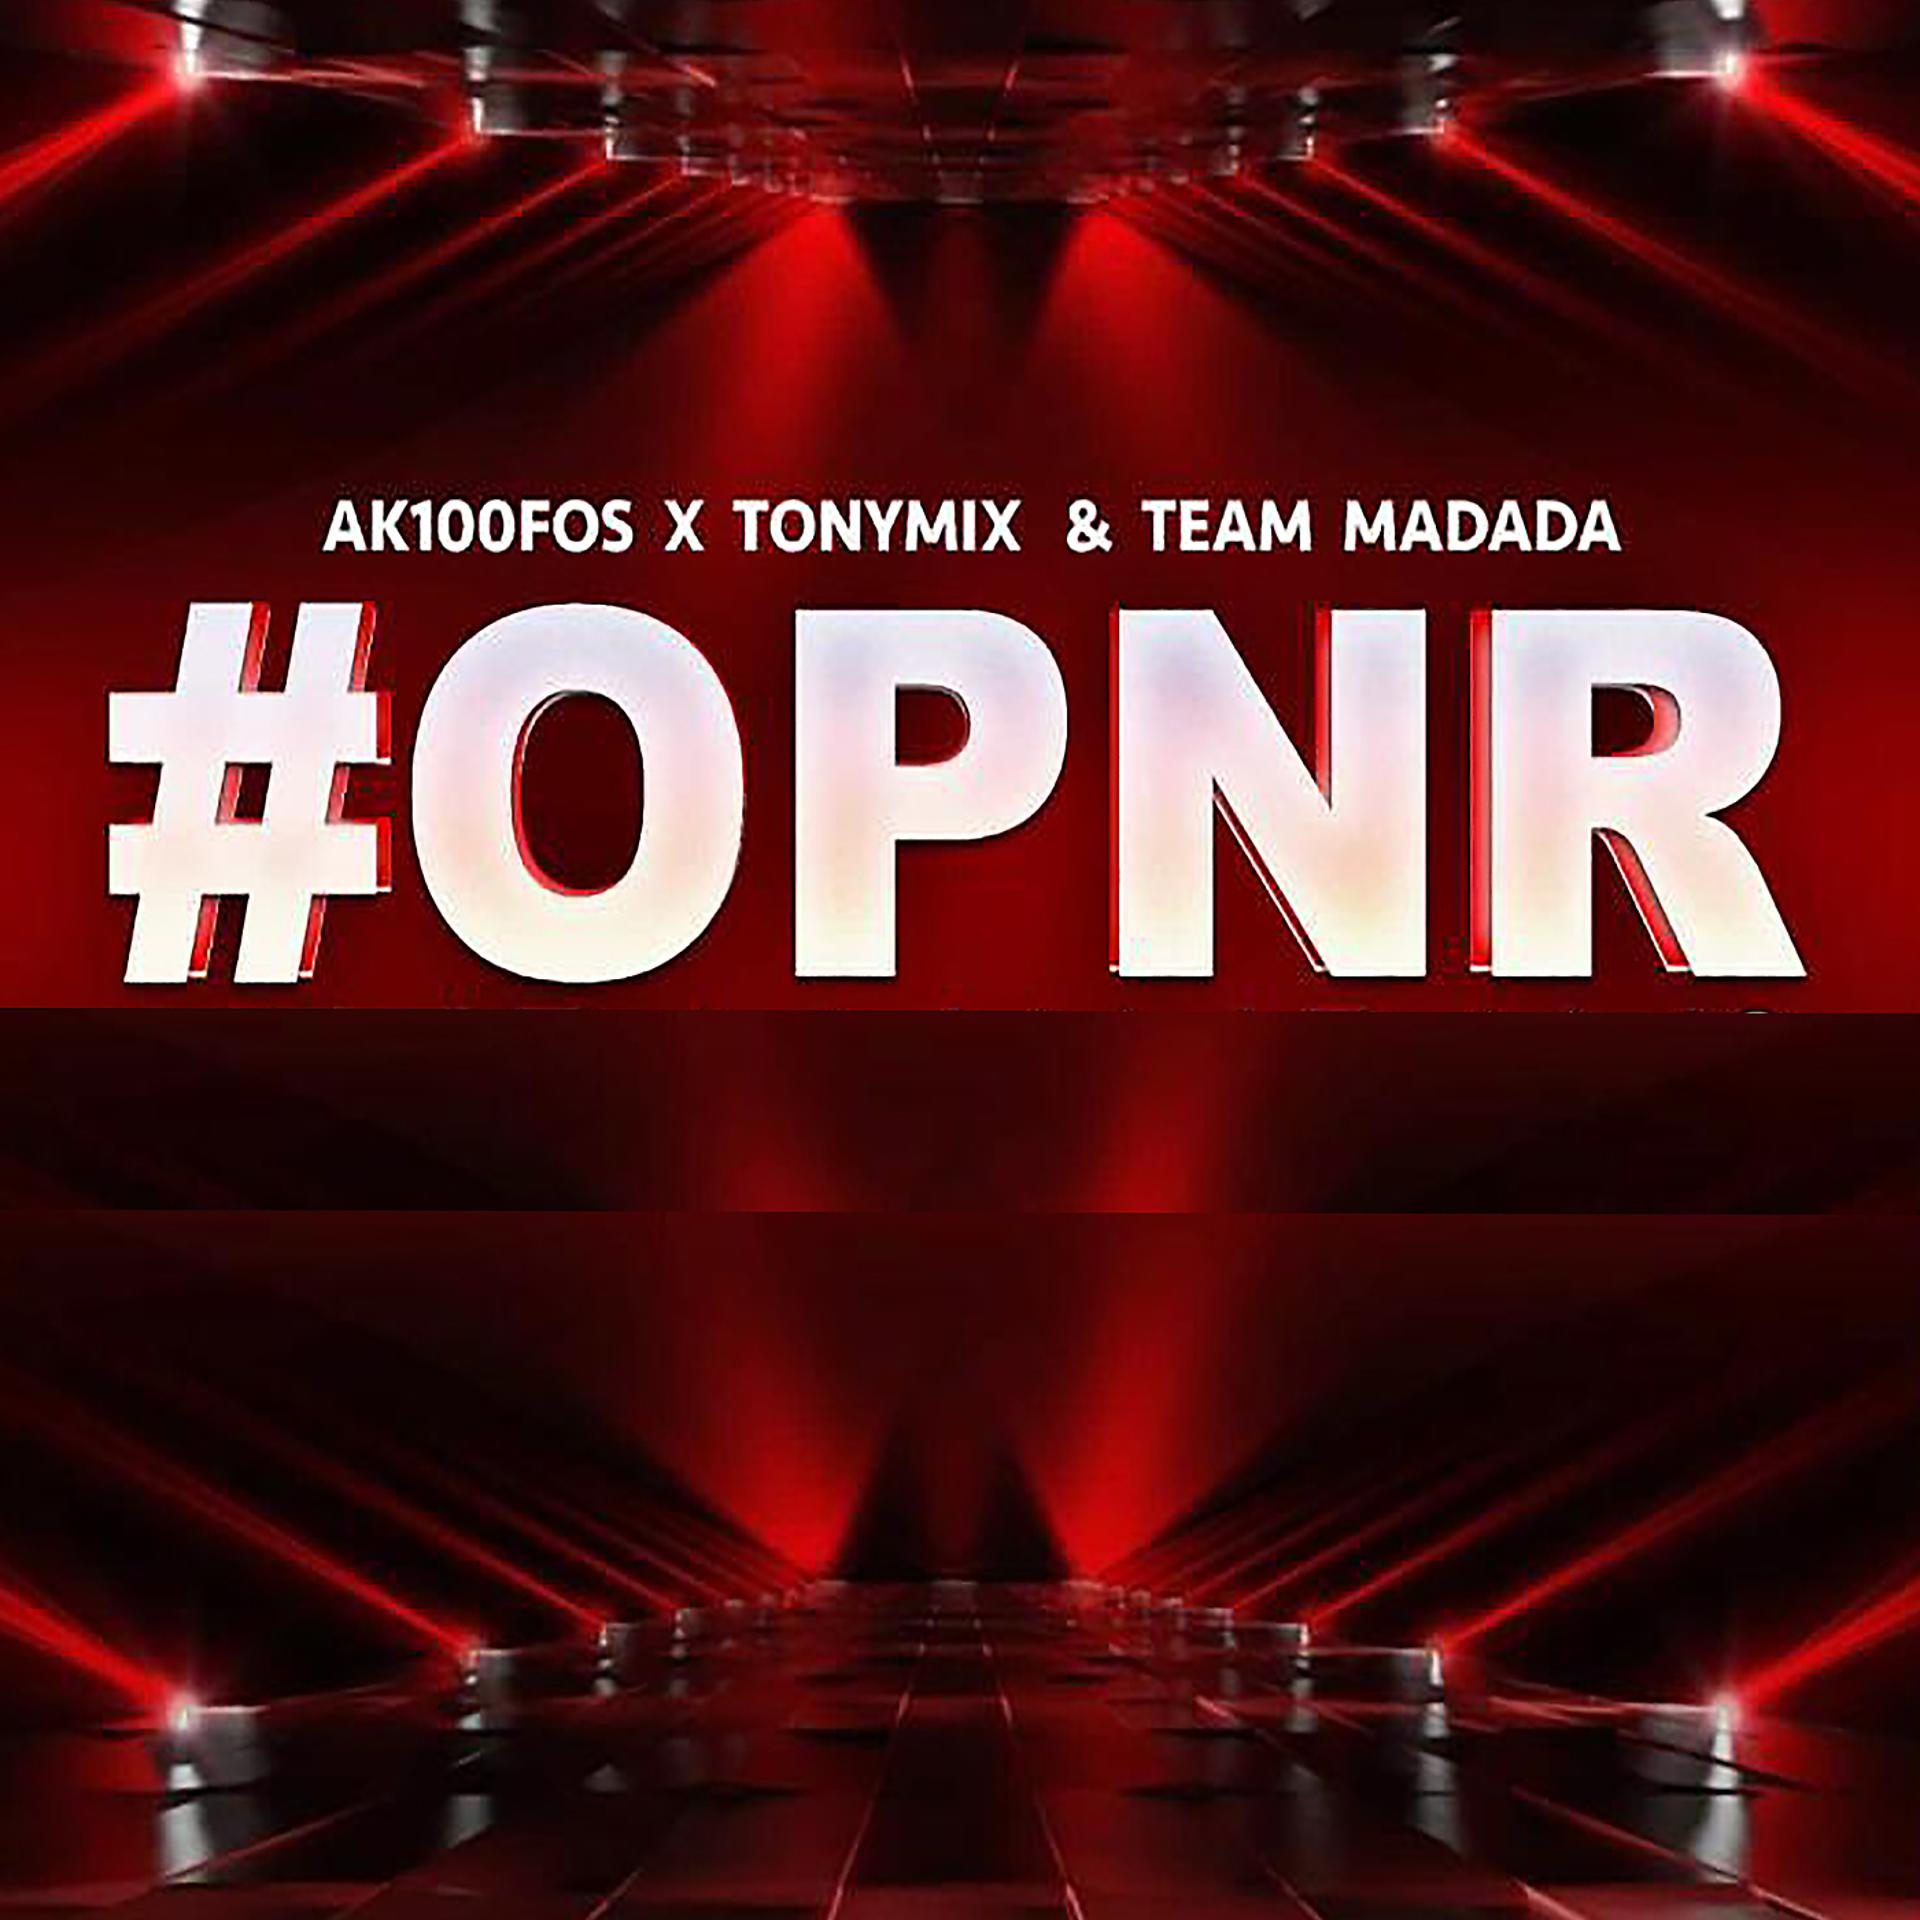 Постер к треку Tony Mix, Ak100fos, Team madada - #Opnr